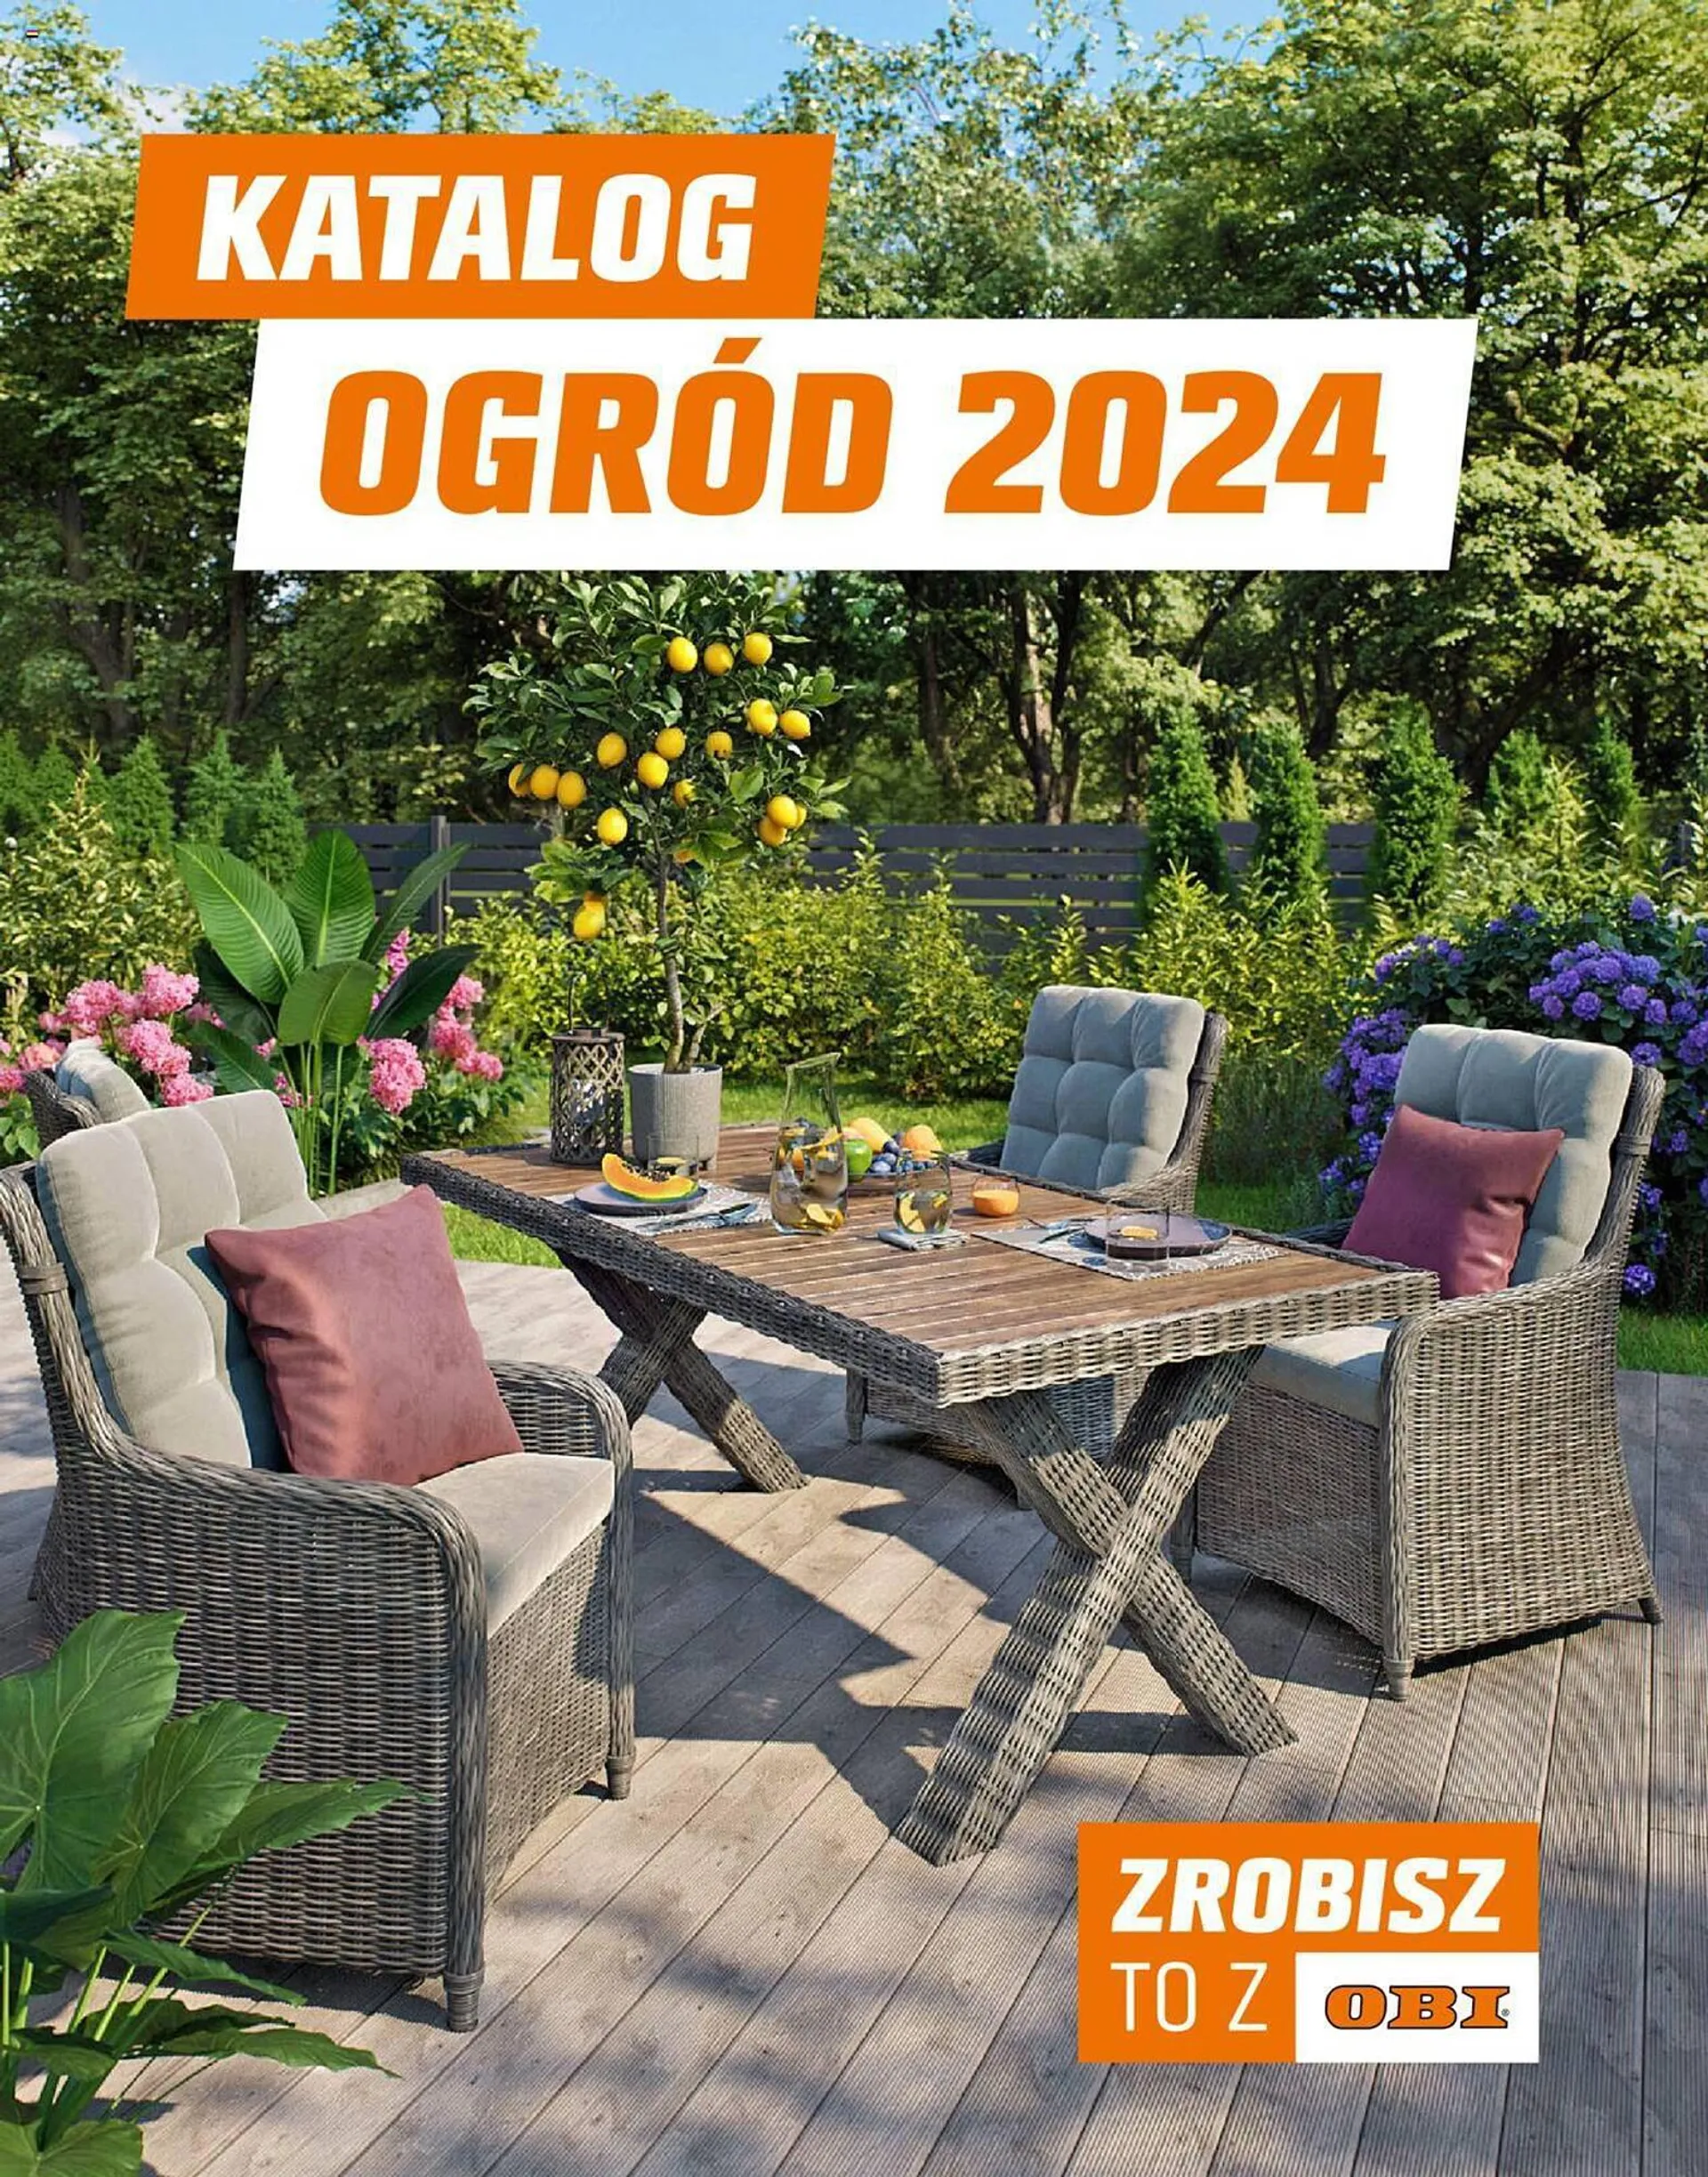 OBI Katalog 2024 - Ogród - 11 marca 31 maja 2024 - Page 1